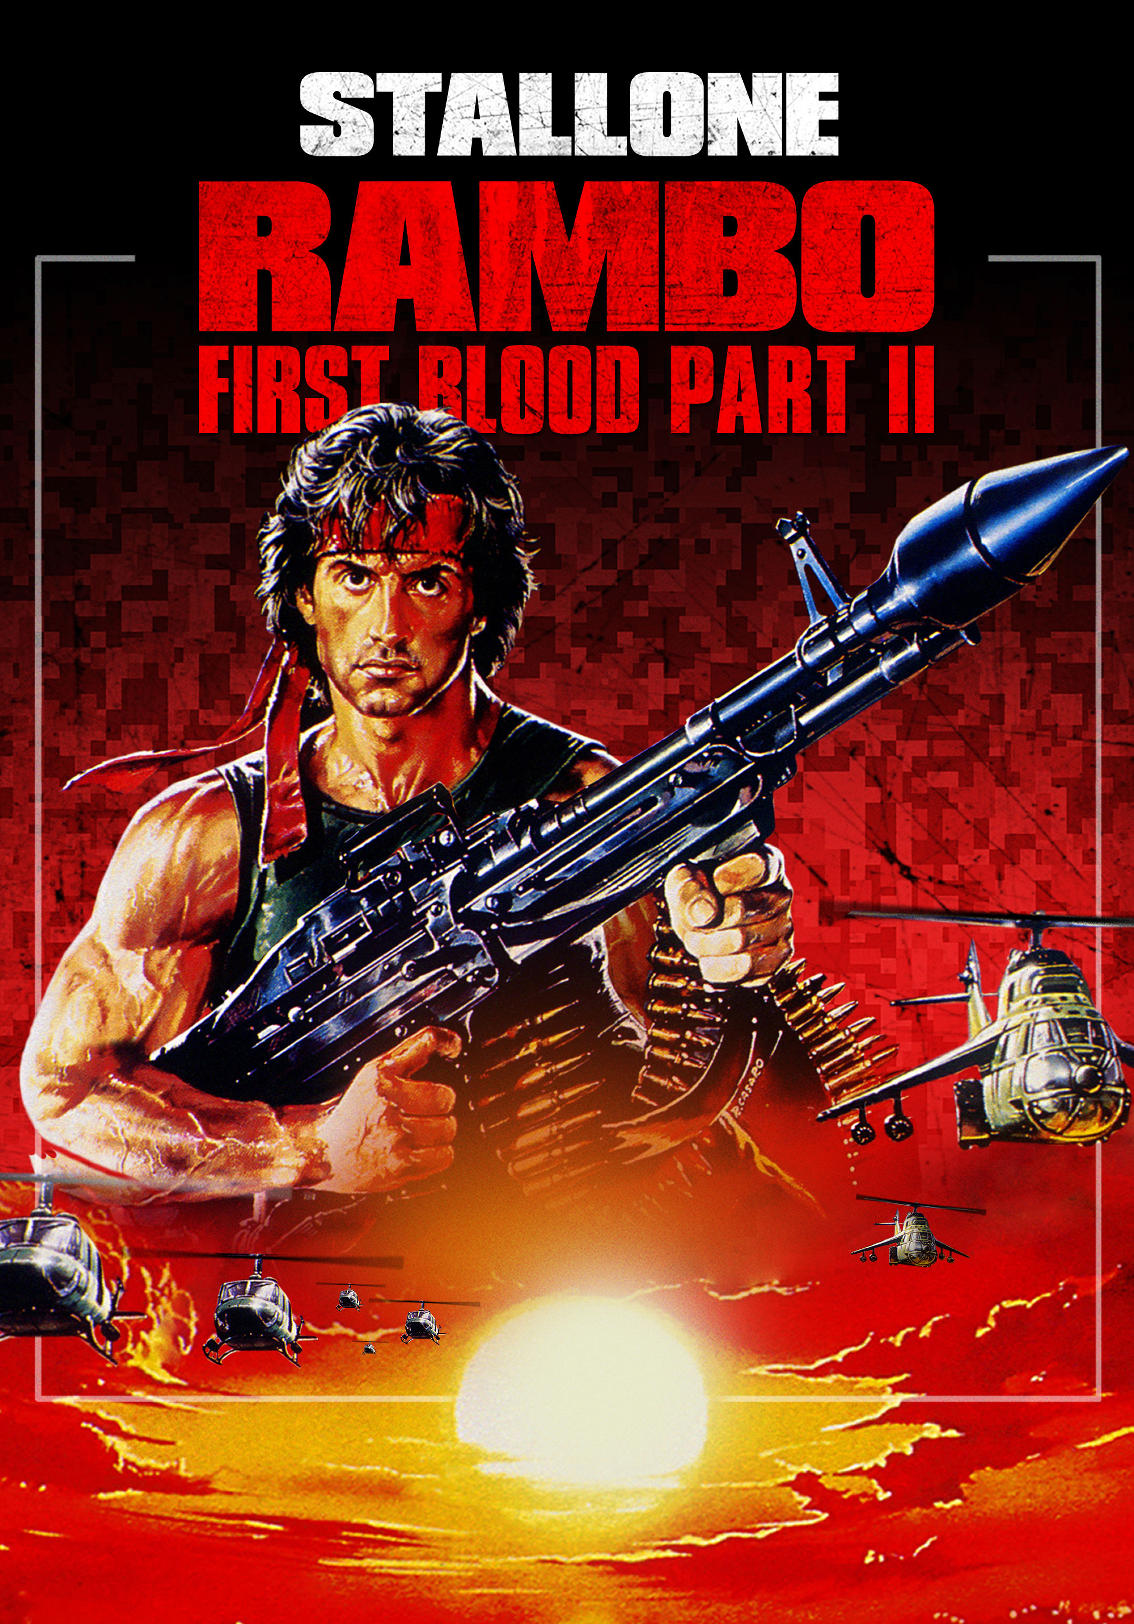 rambo first blood full movie